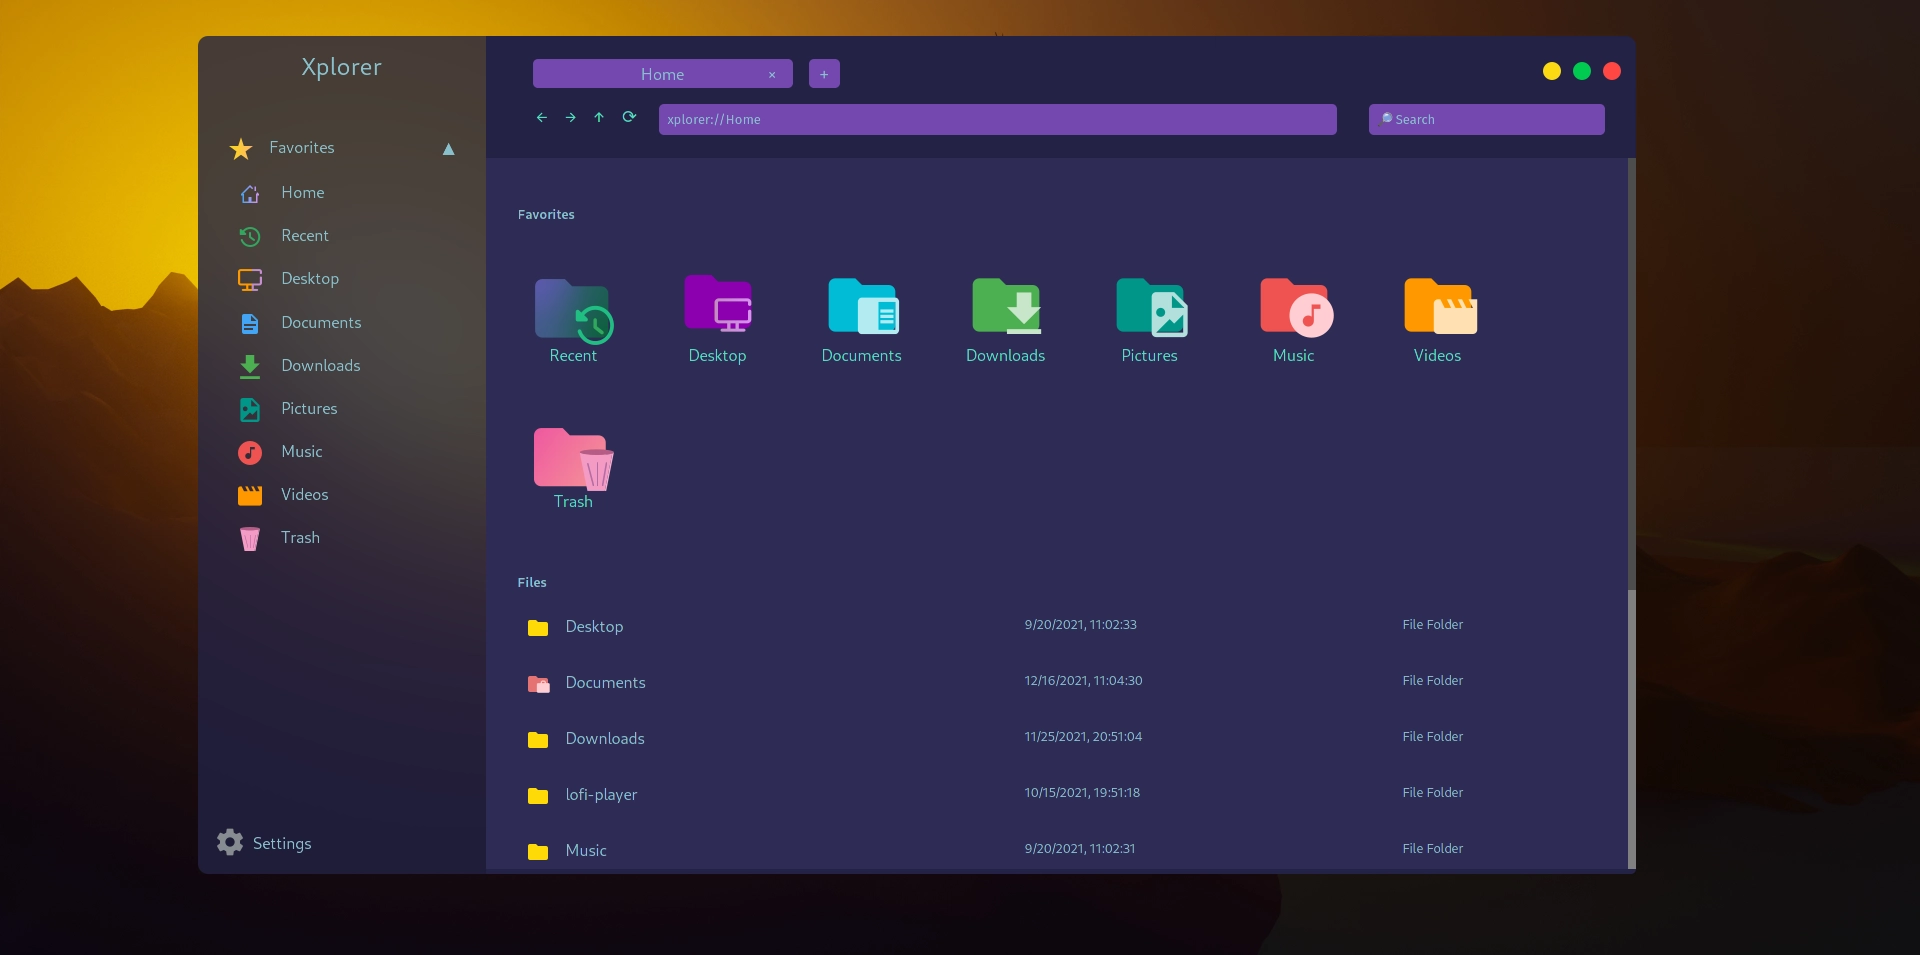 Xplorer shades of purple on Linux